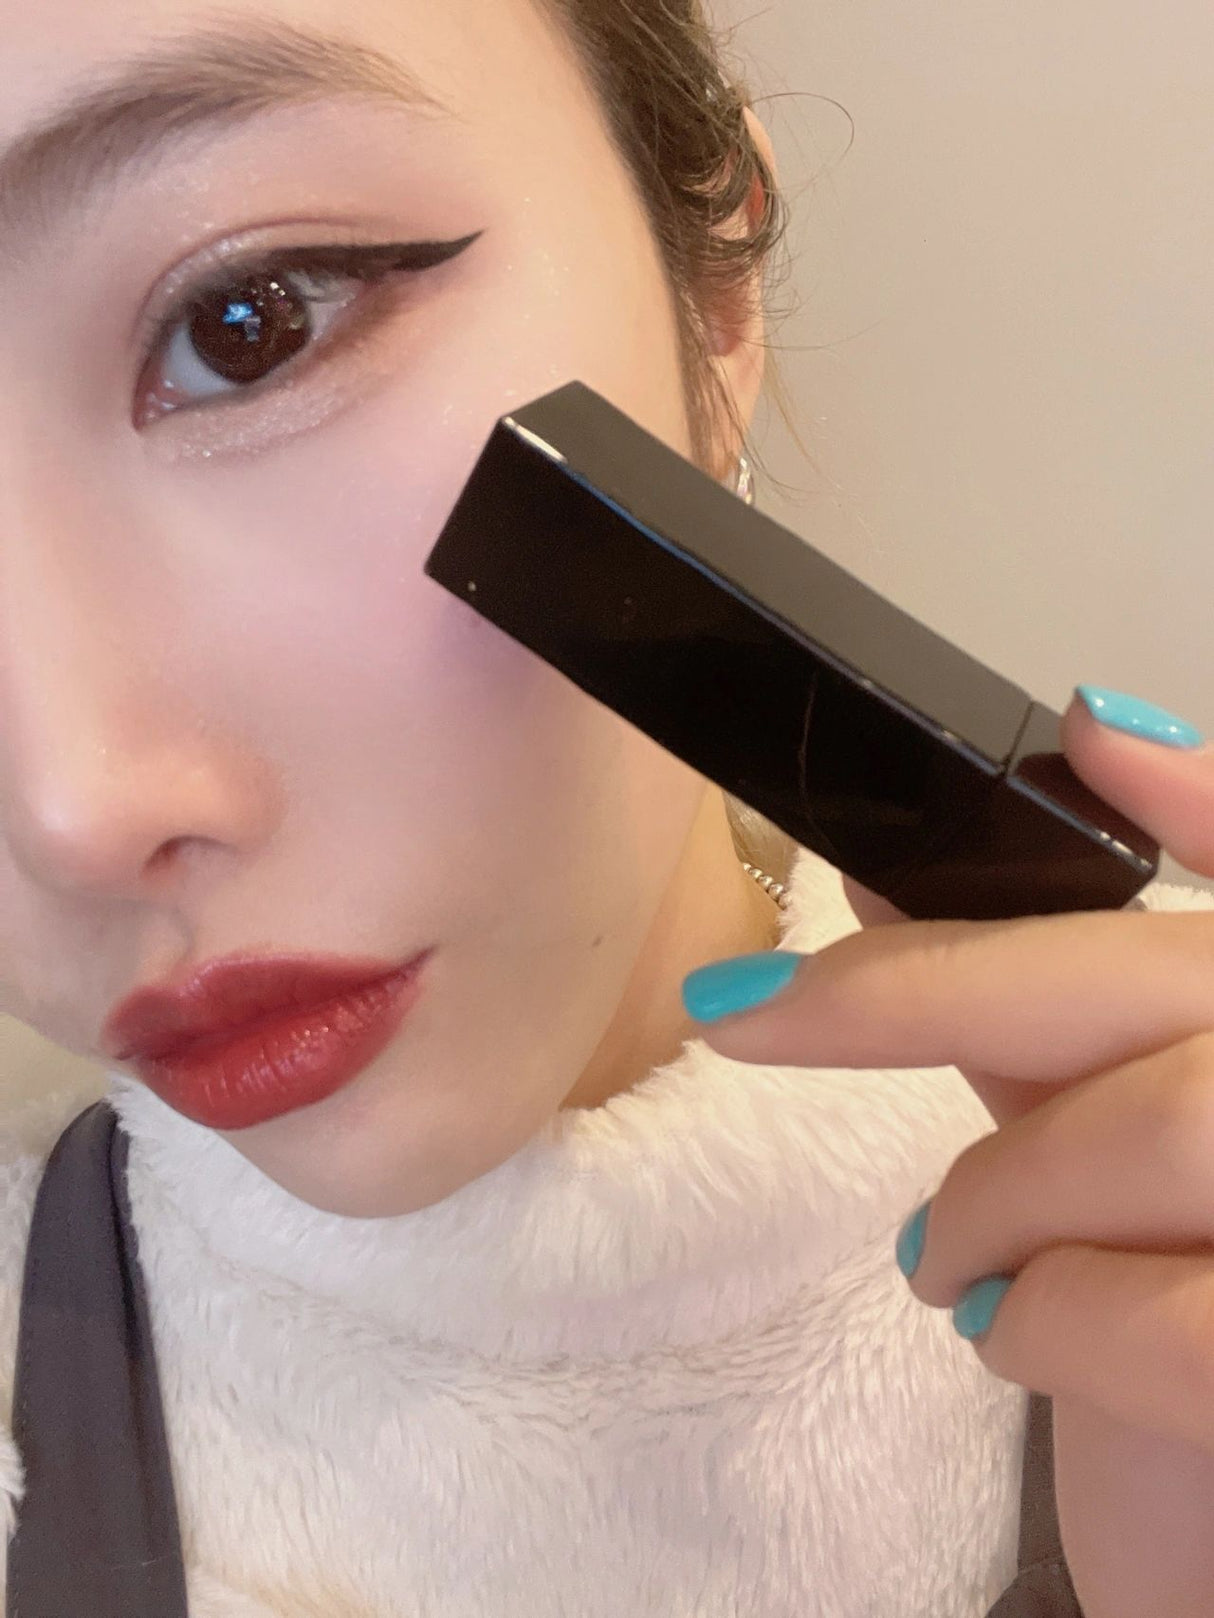 Japanese kate monster lipstick super popular color No. 5 moisturizing style